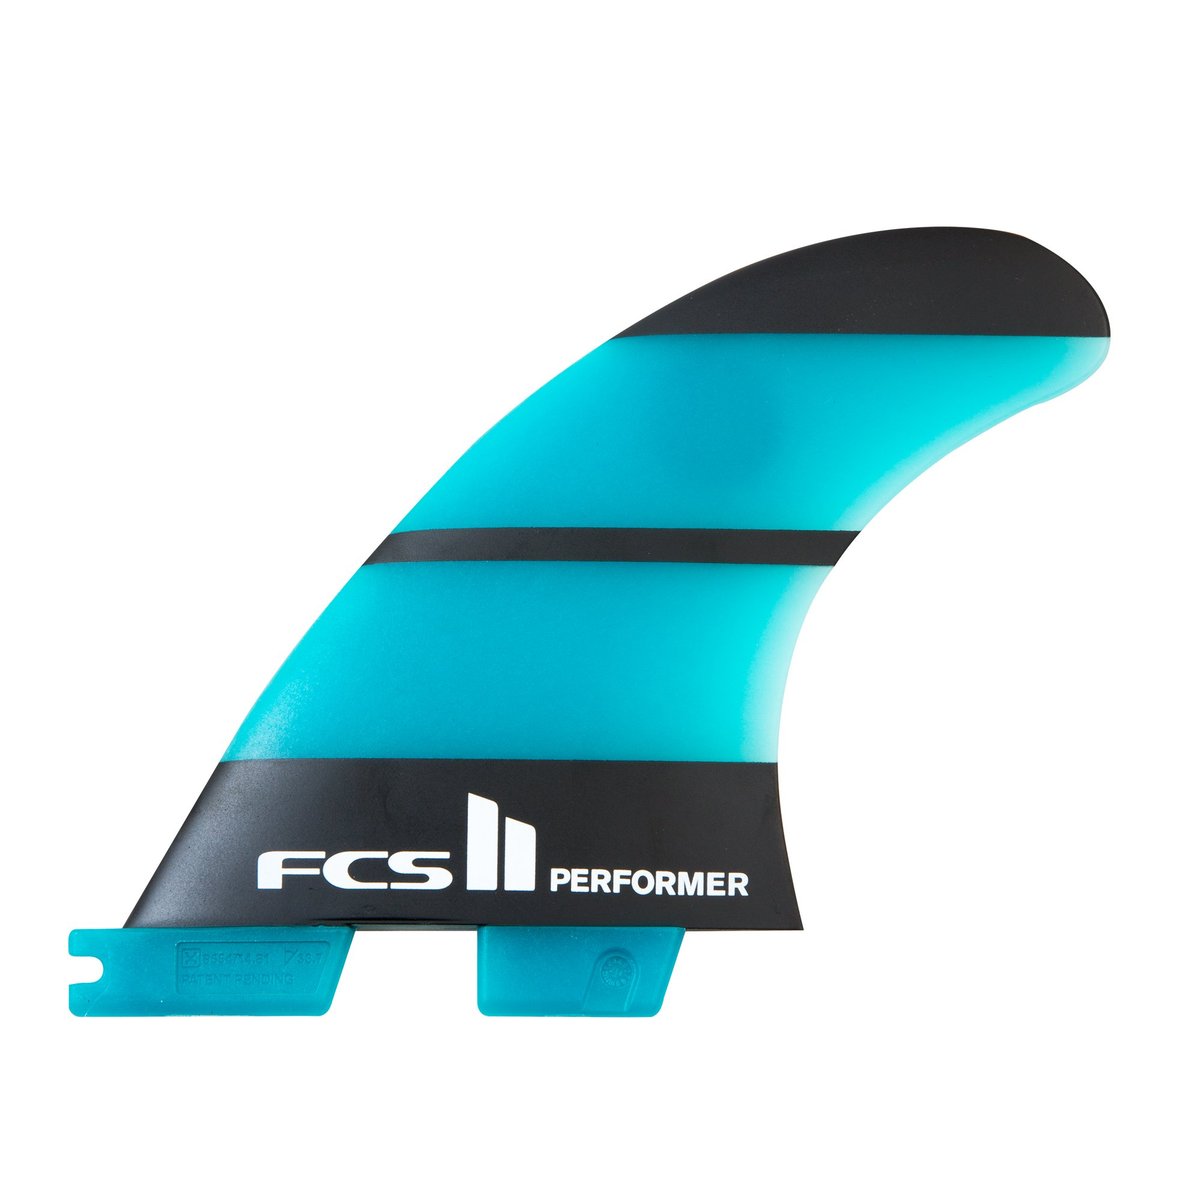 FCS 2 Performer Neo Glass Tri-Quad Fin Set